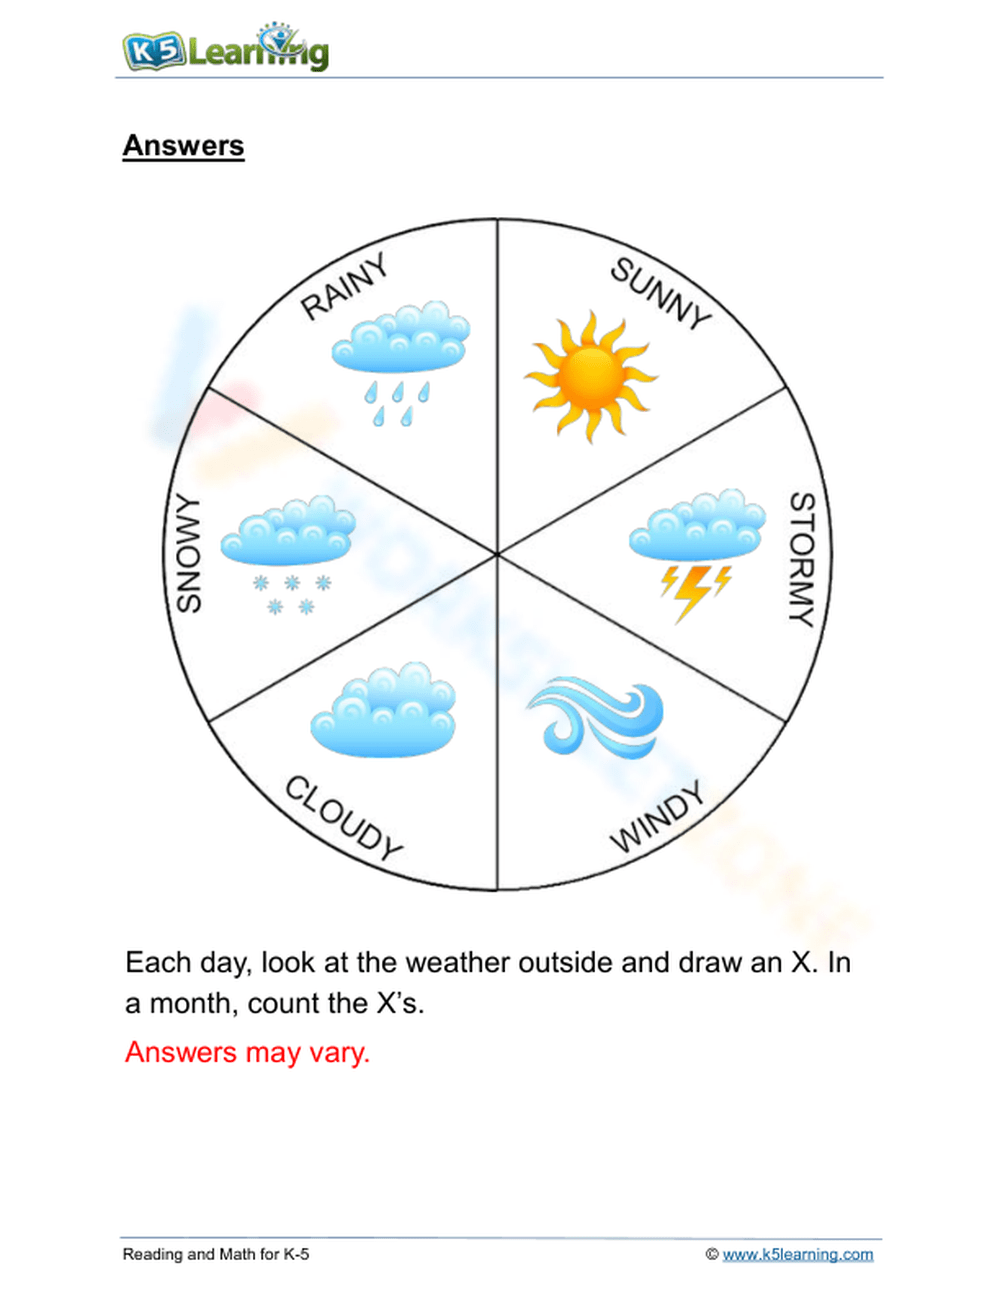 Weather Wheel